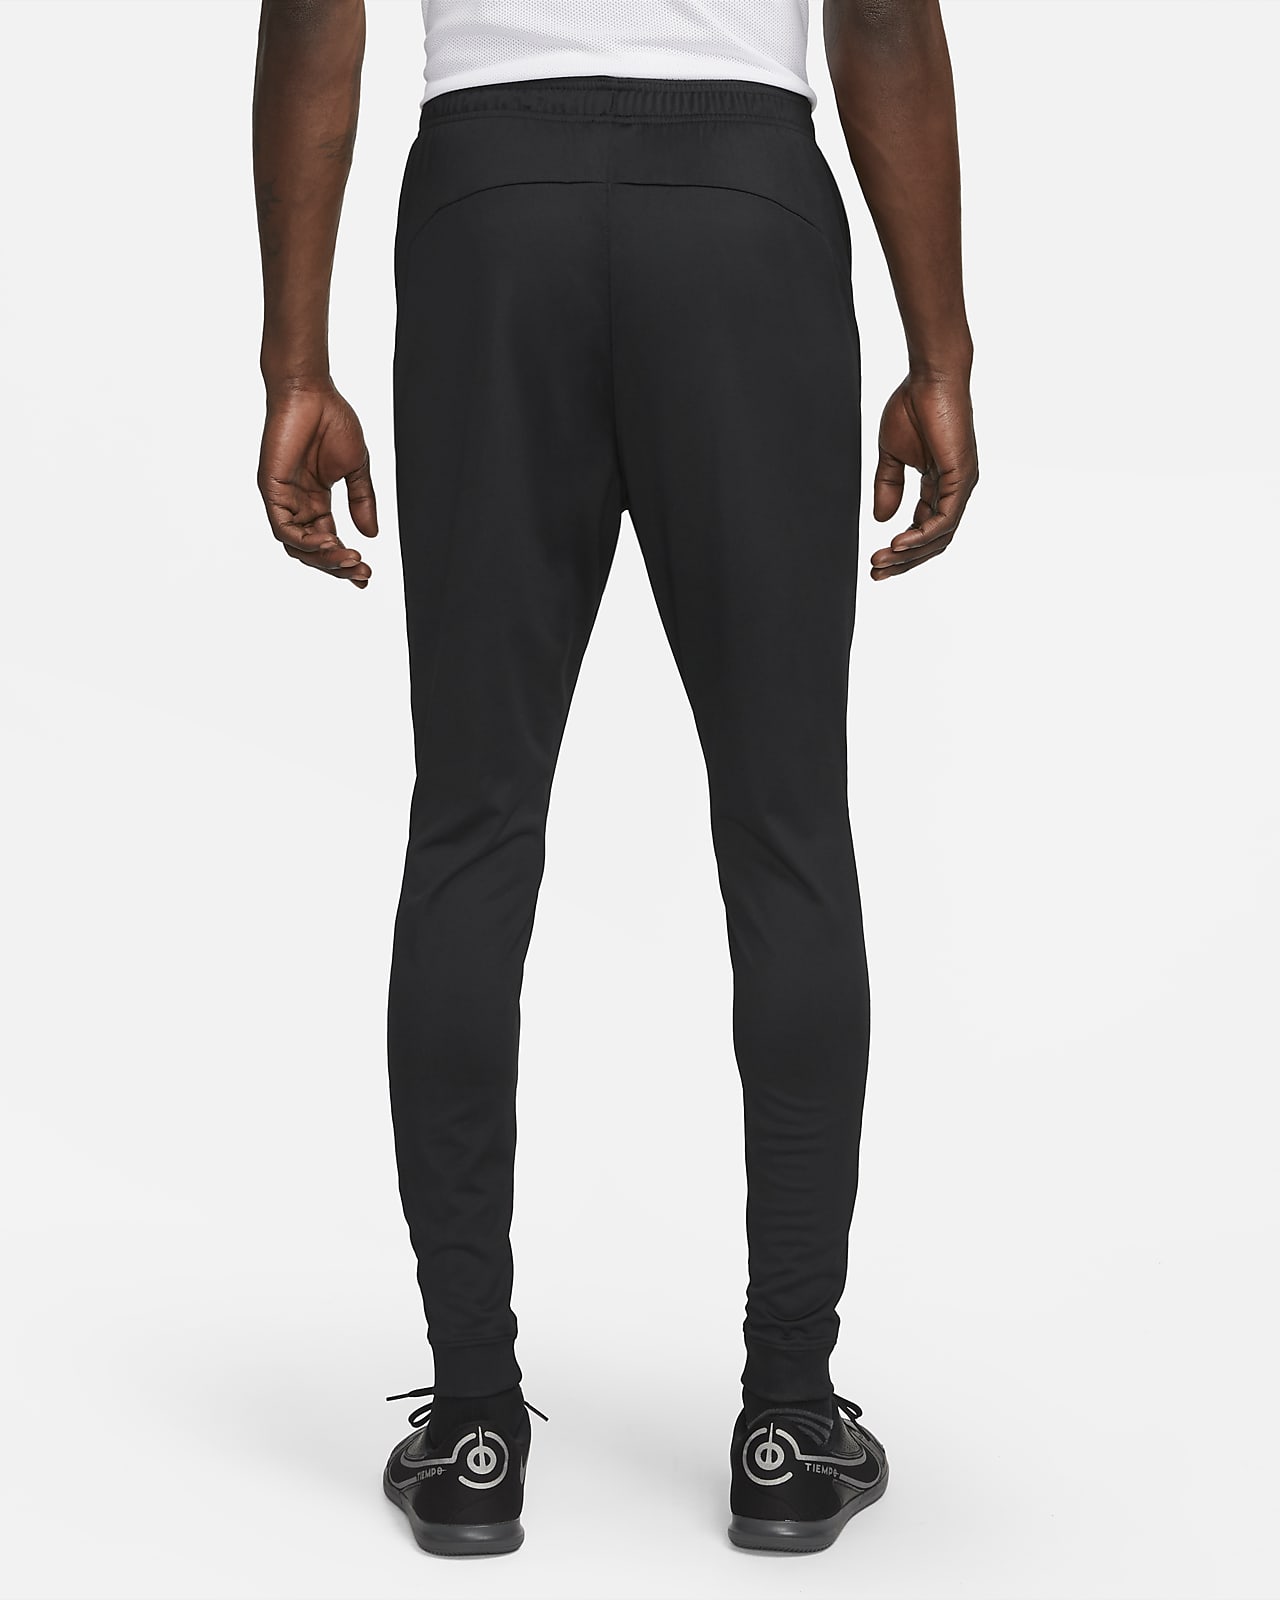 Nike Tracksuit Bottoms, Black/White, M